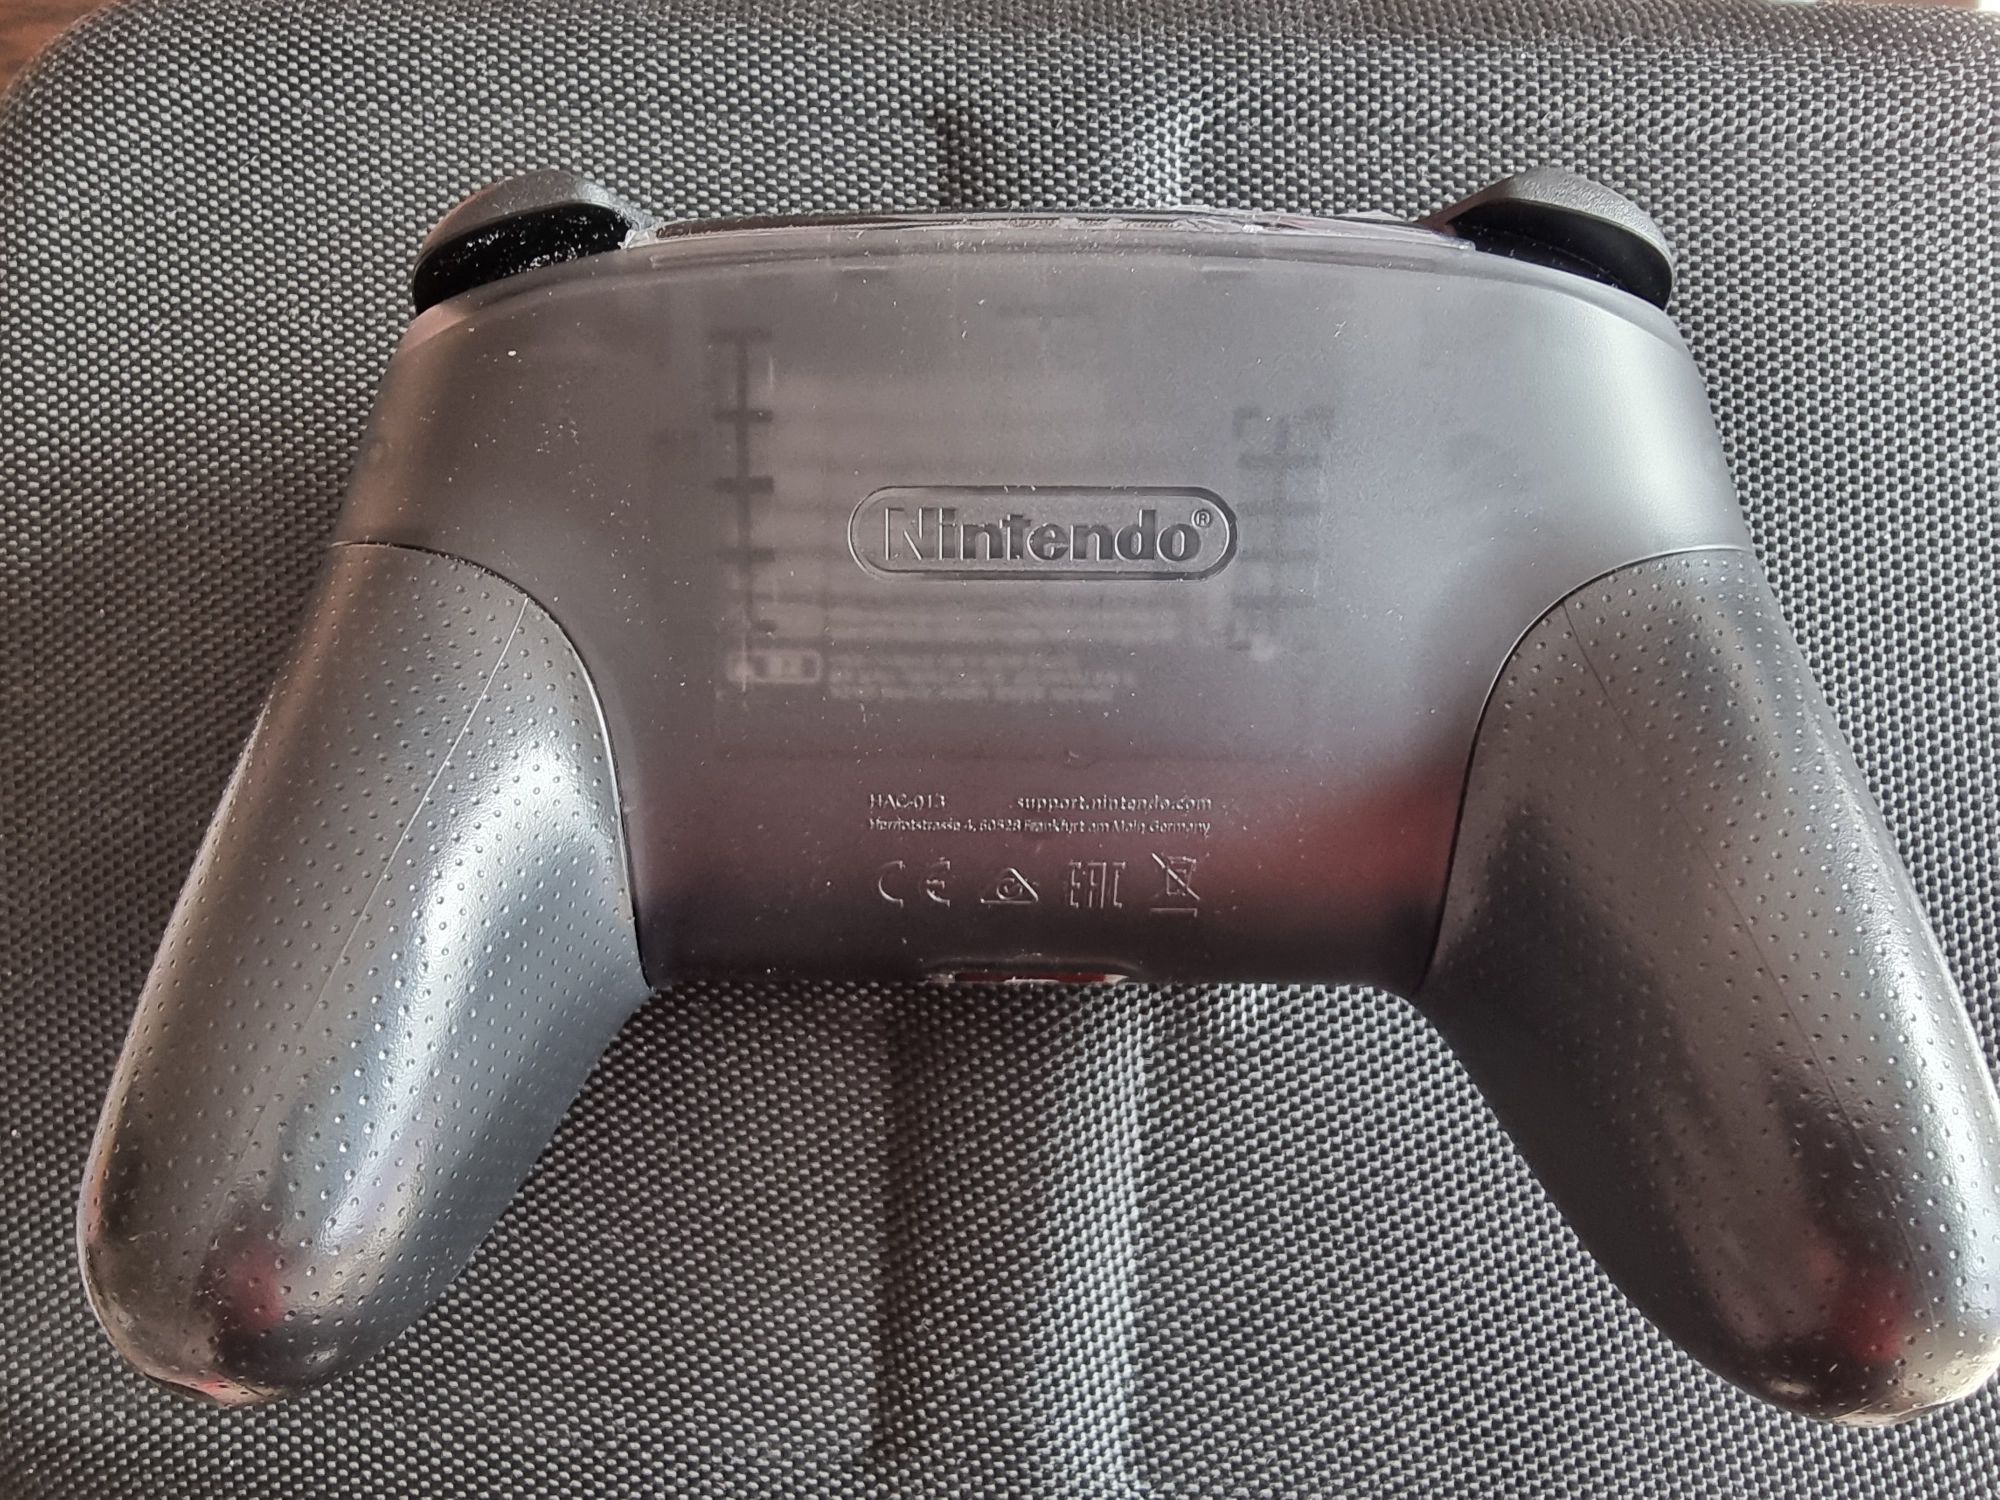 Nintendo Switch Pro Controller